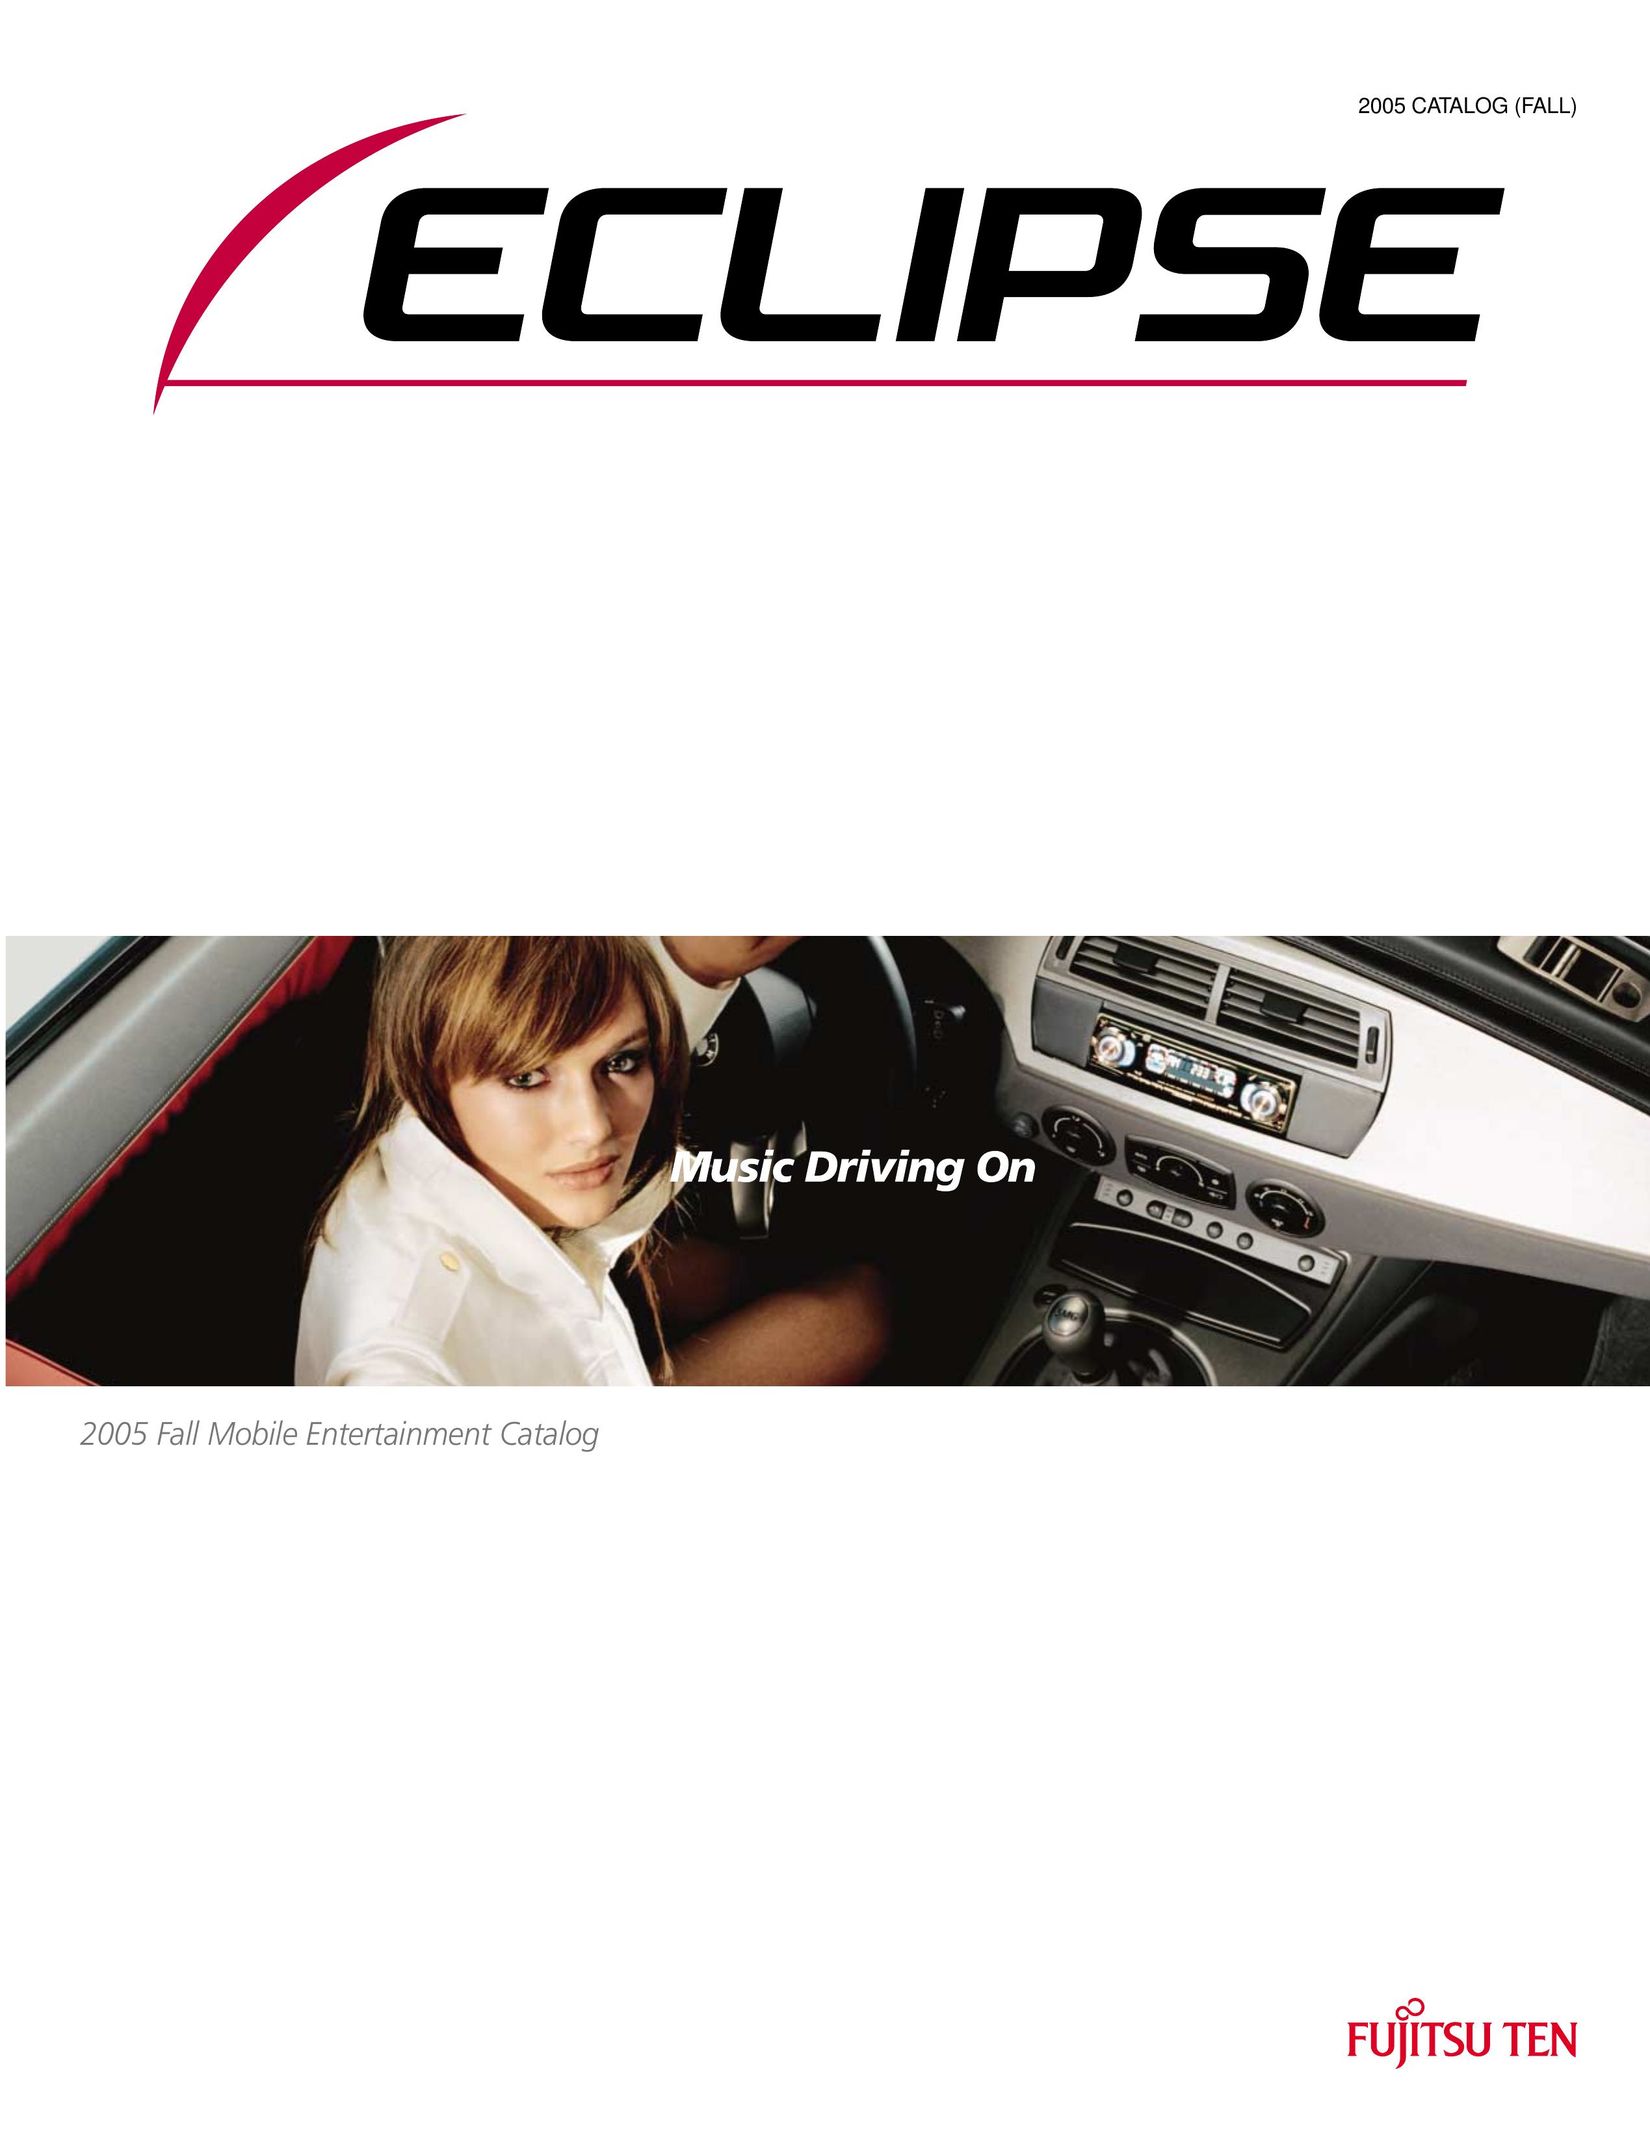 Eclipse - Fujitsu Ten HDR105 MP3 Player User Manual